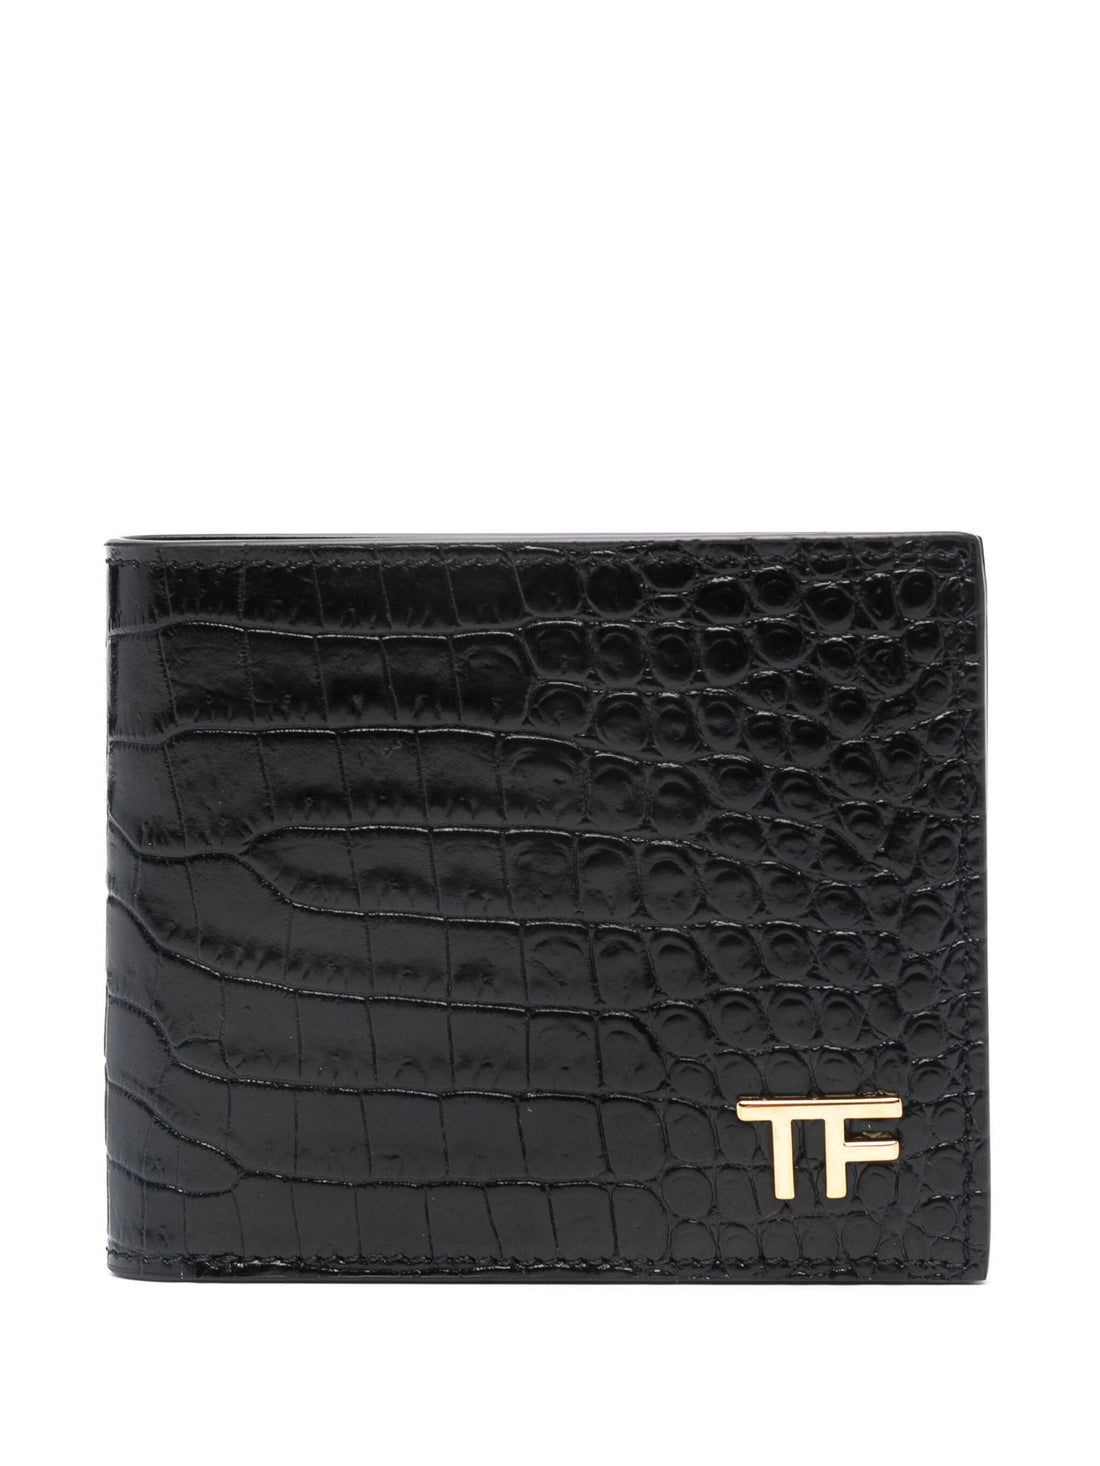 TOM FORD TF Logo Crocodile Leather Wallet Black/Gold - MAISONDEFASHION.COM